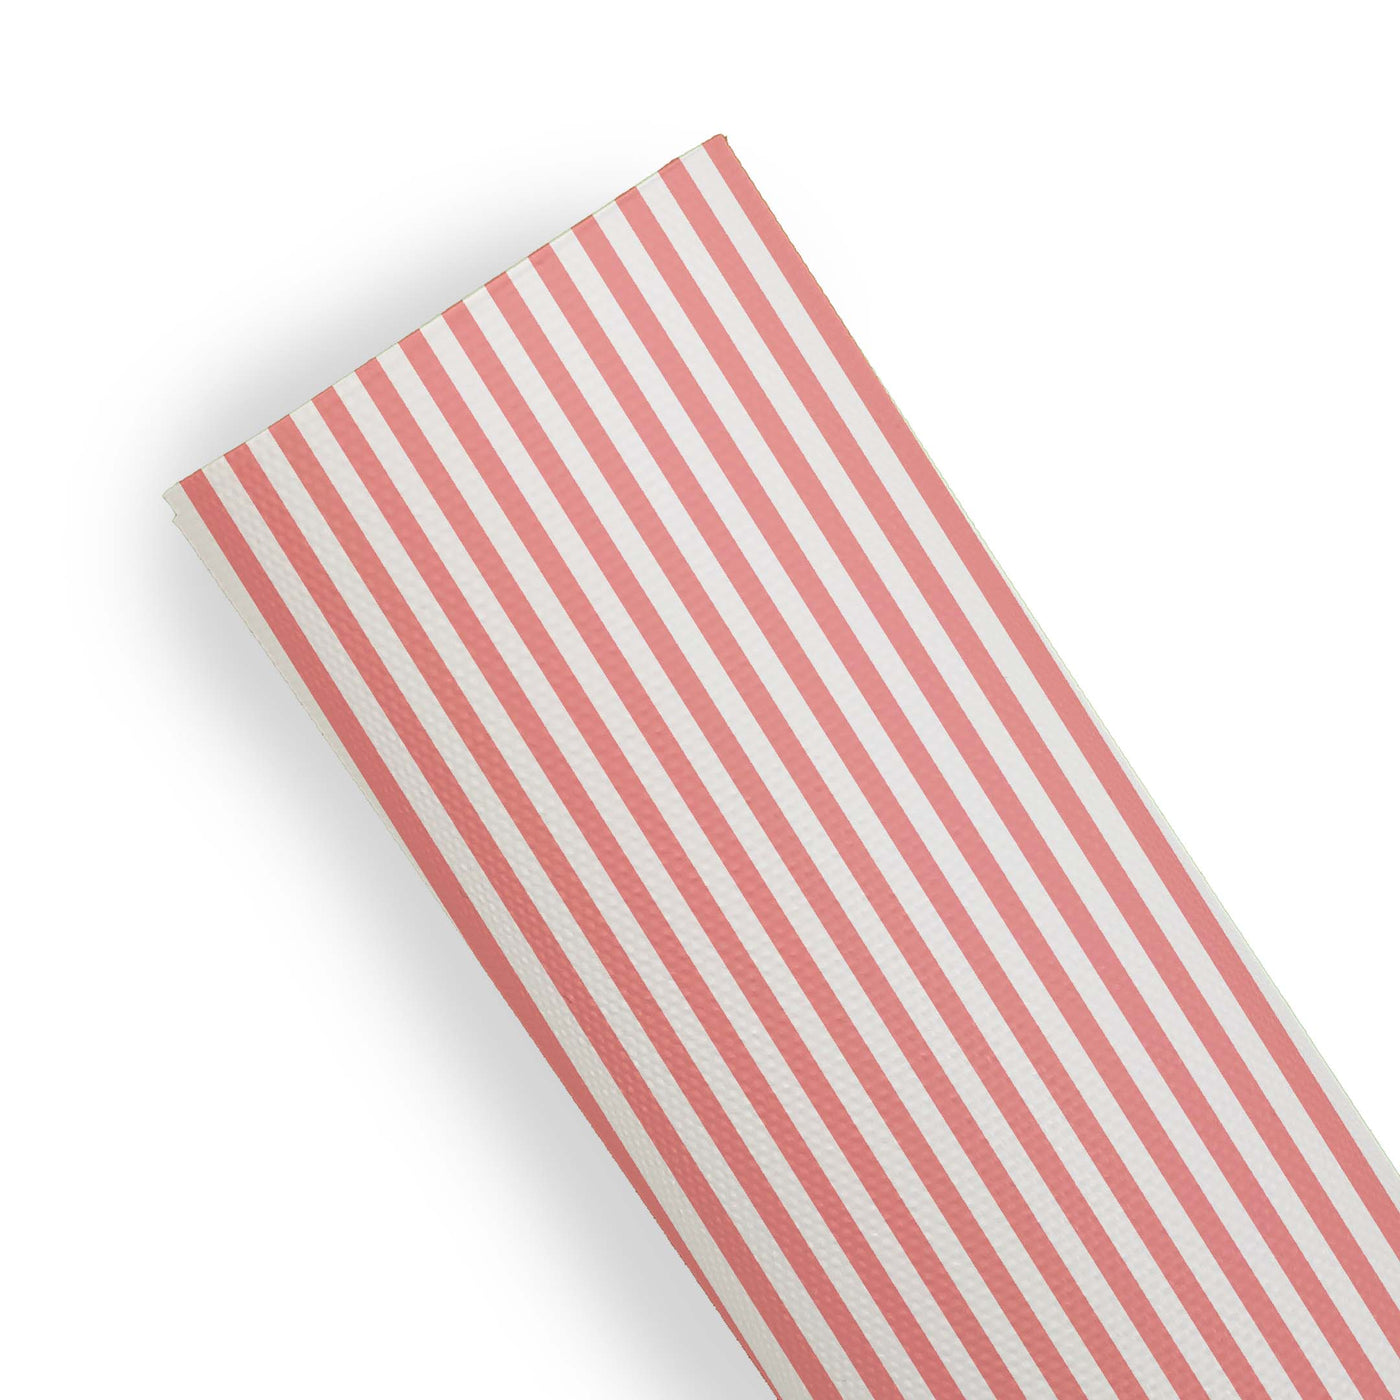 Stripe - Leatherette vinyl - canvas - choose Fabric material Sheets